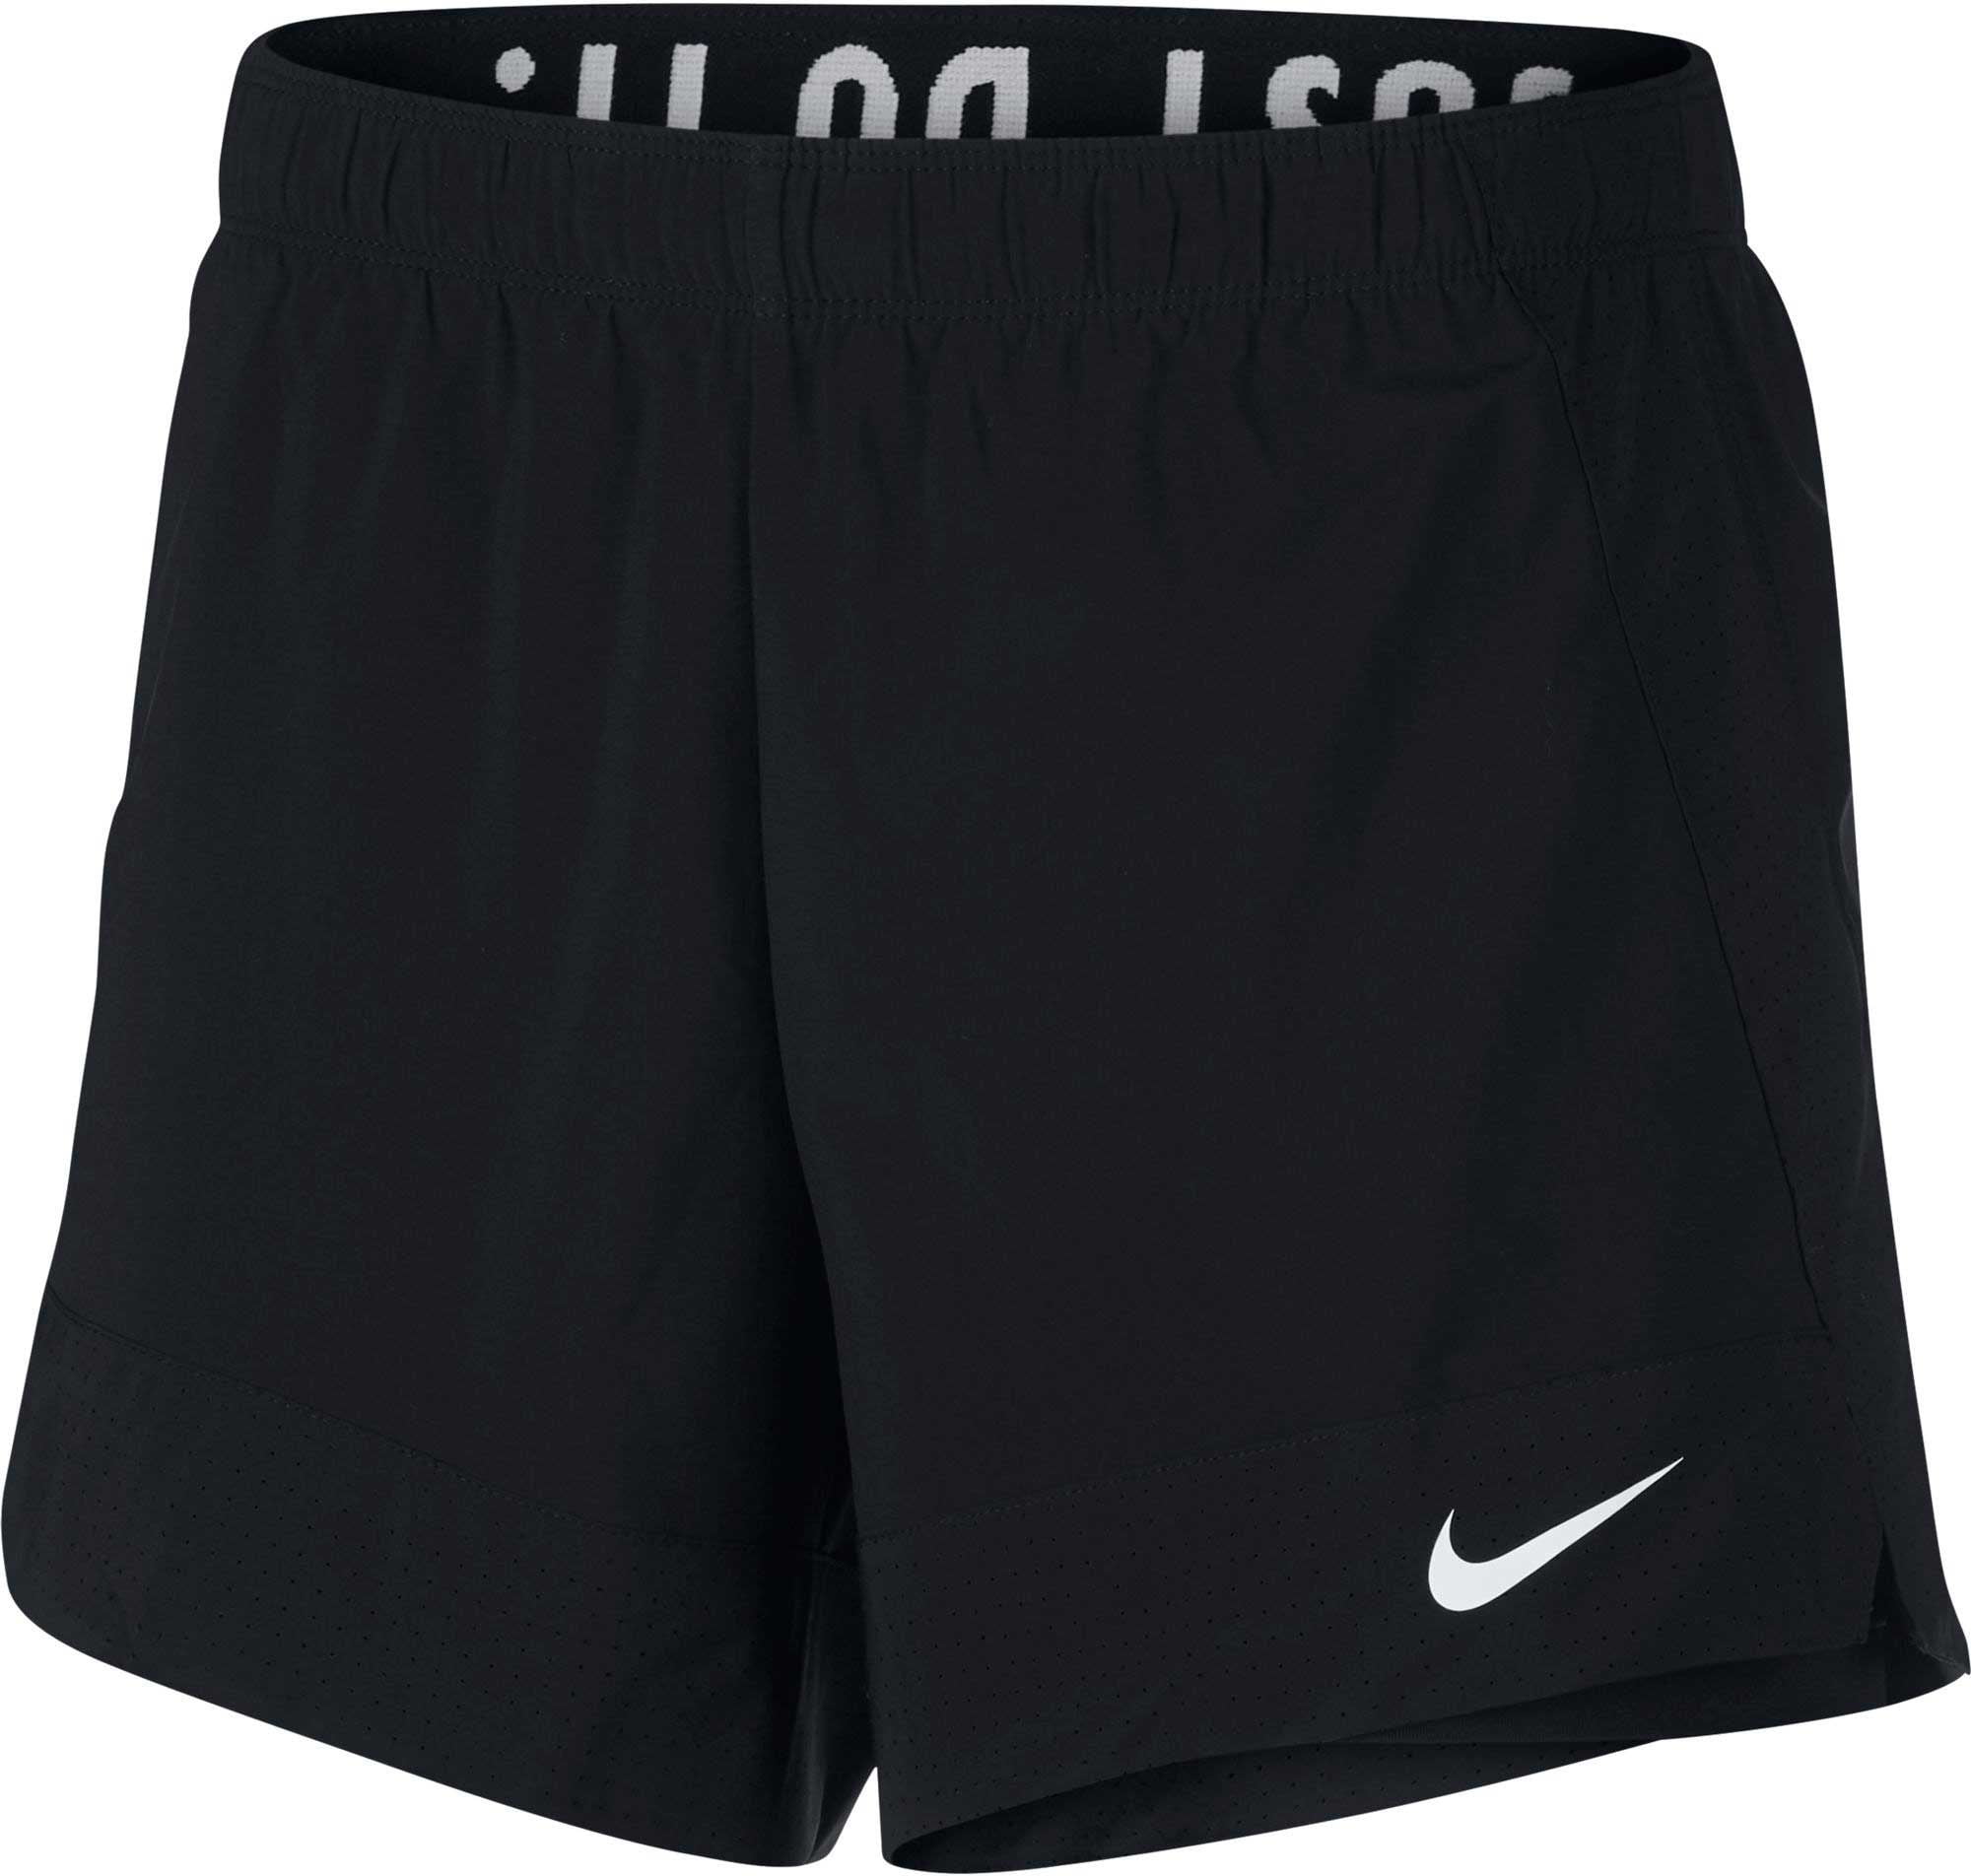 nike flex 2in1 shorts